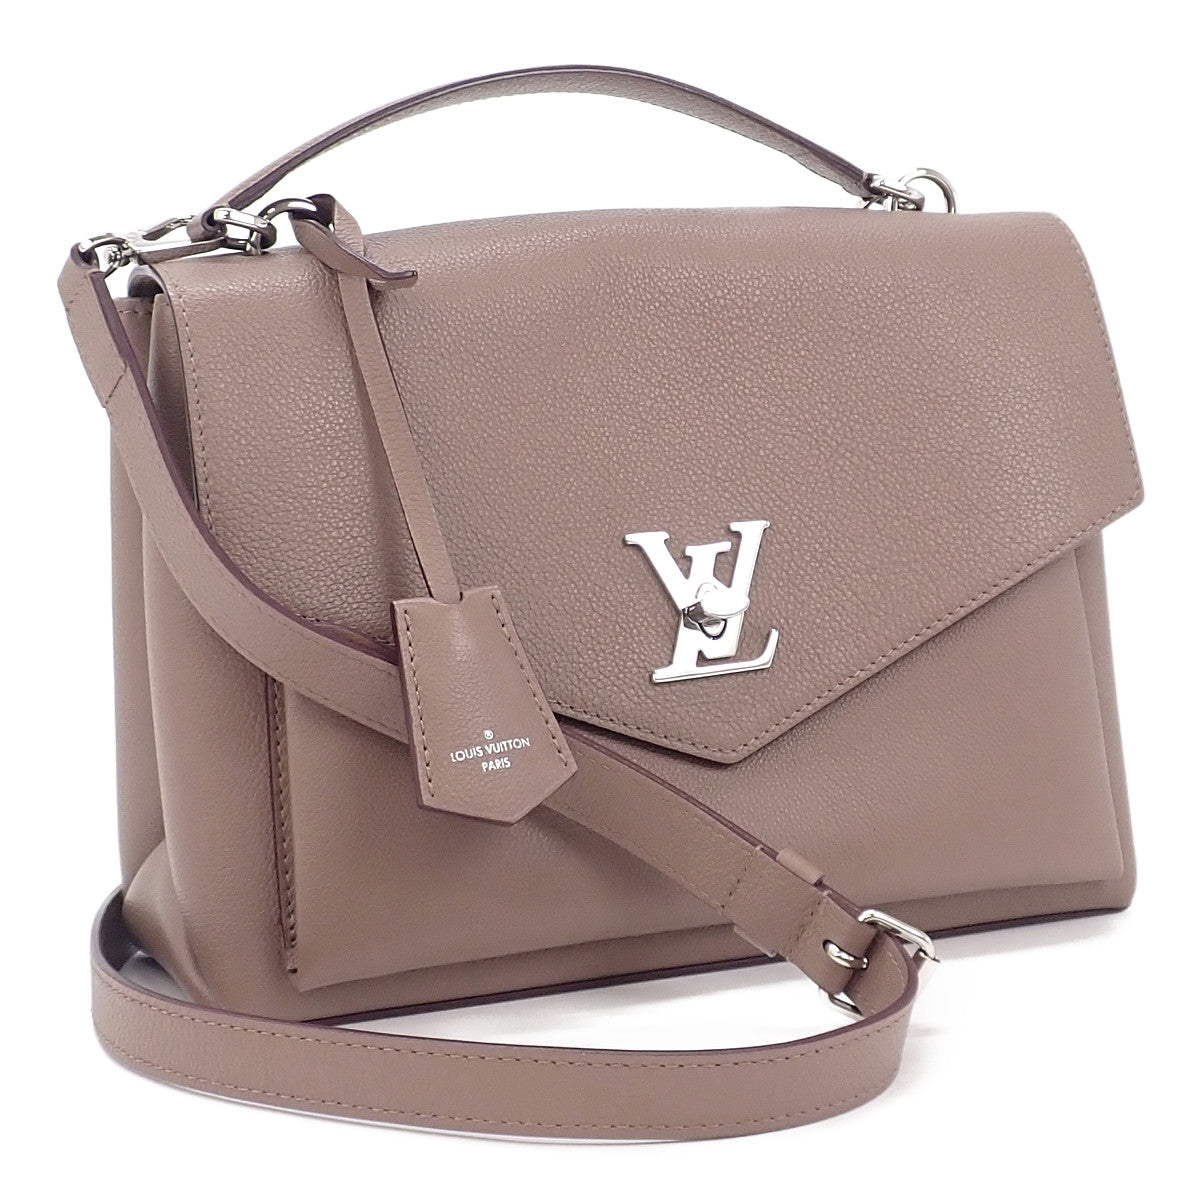 Louis Vuitton My Lock Me Satchel Leather Handbag M54877 in Excellent condition